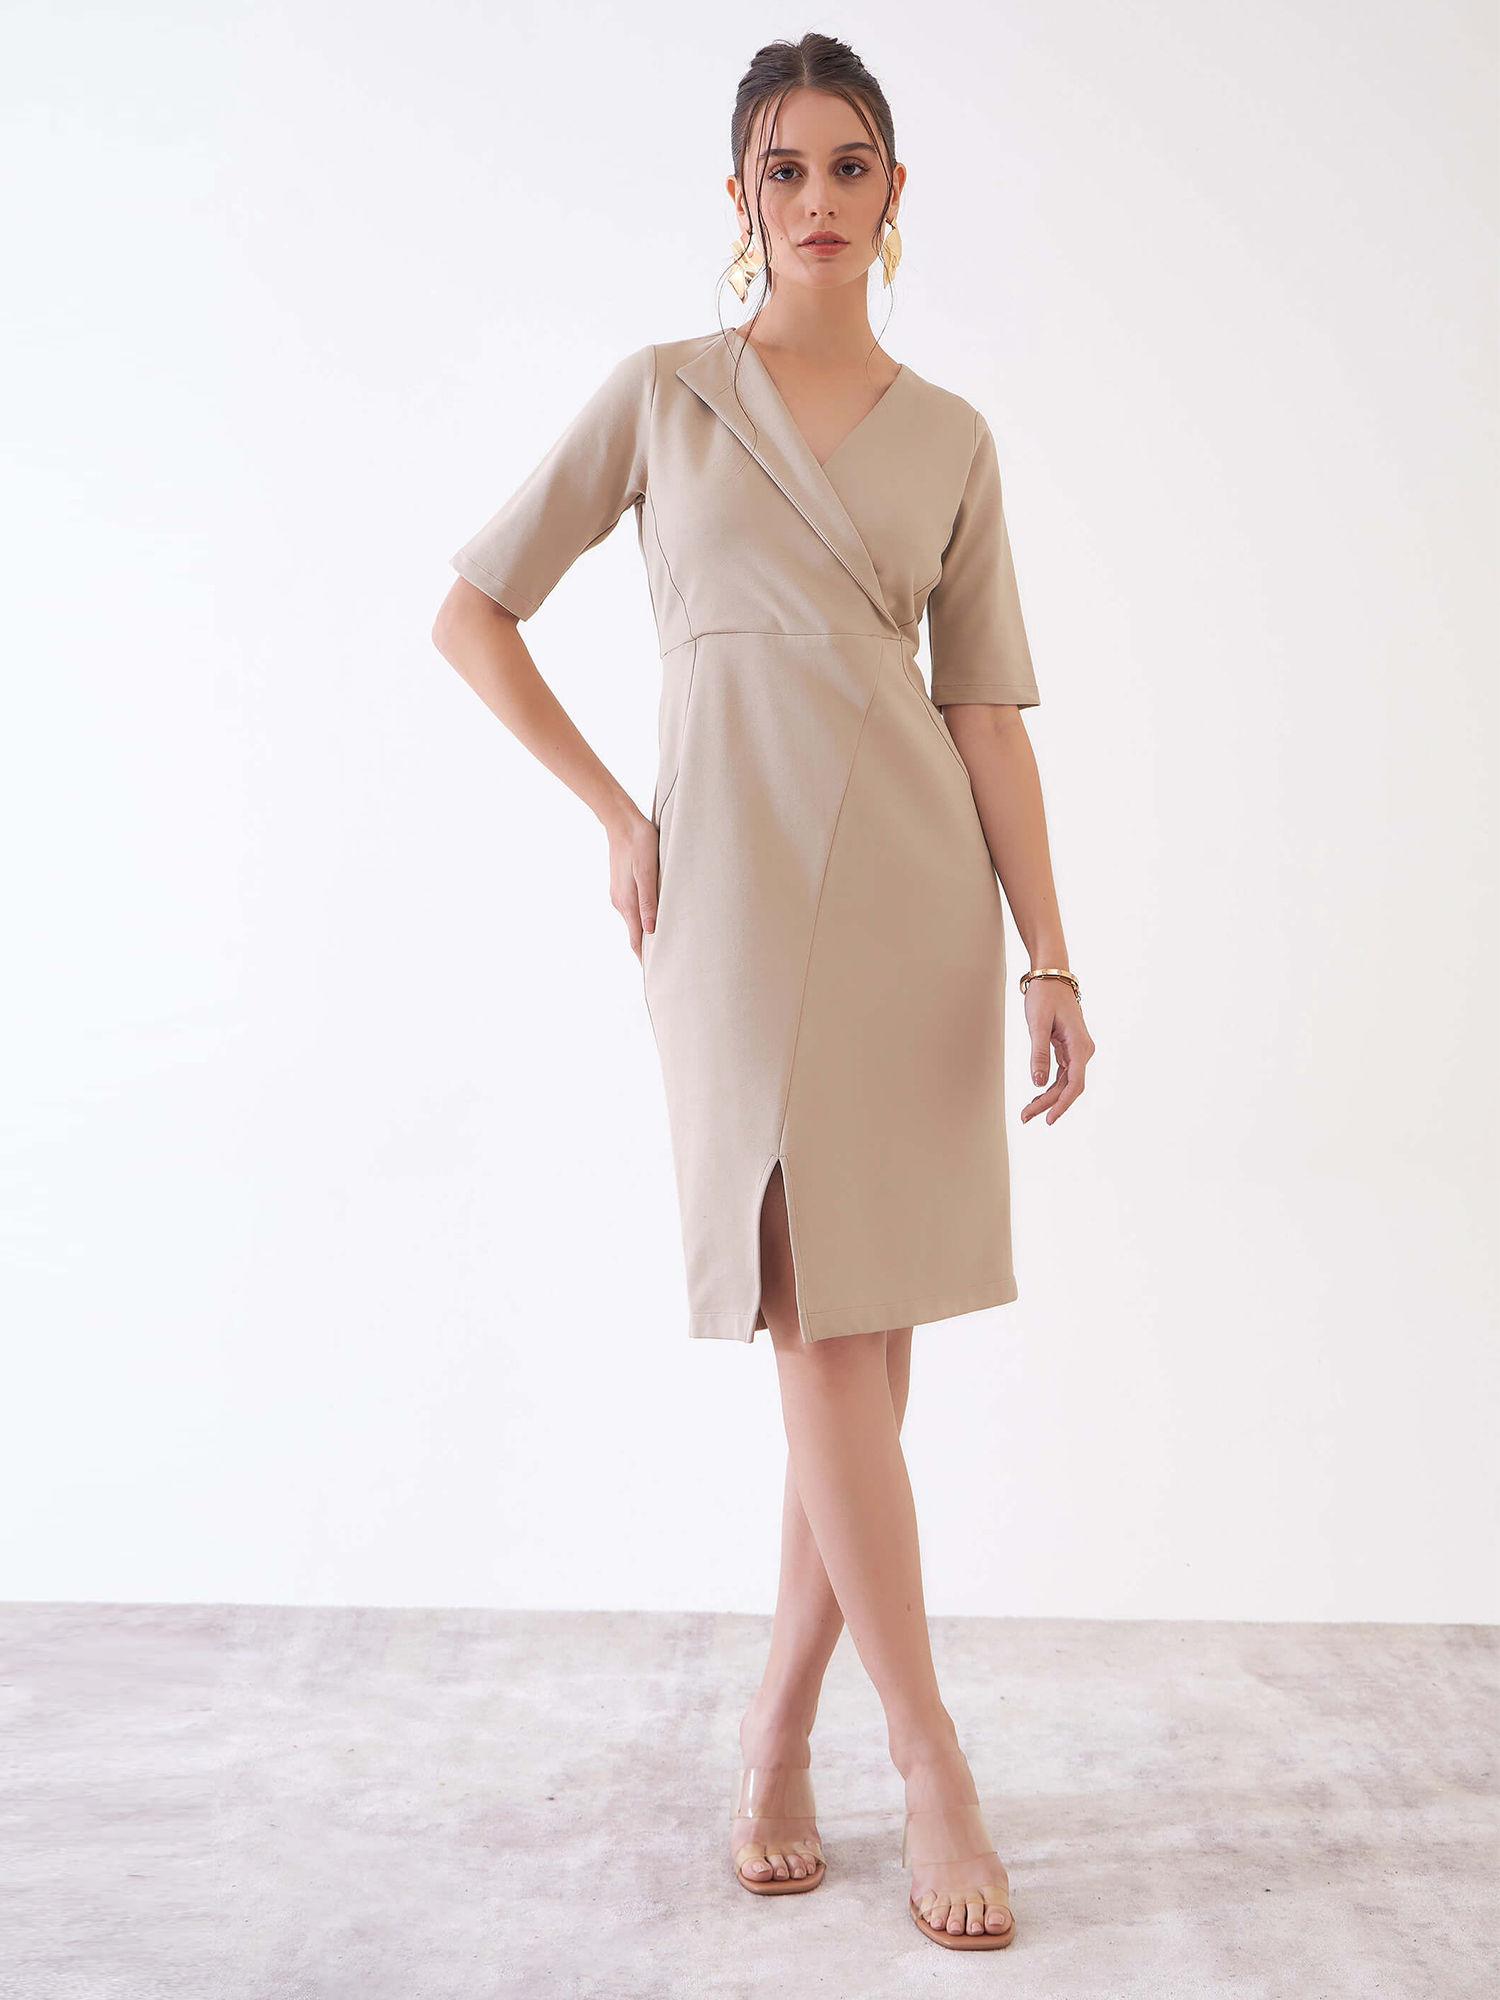 kimberly-ivory seam detail sheath dress